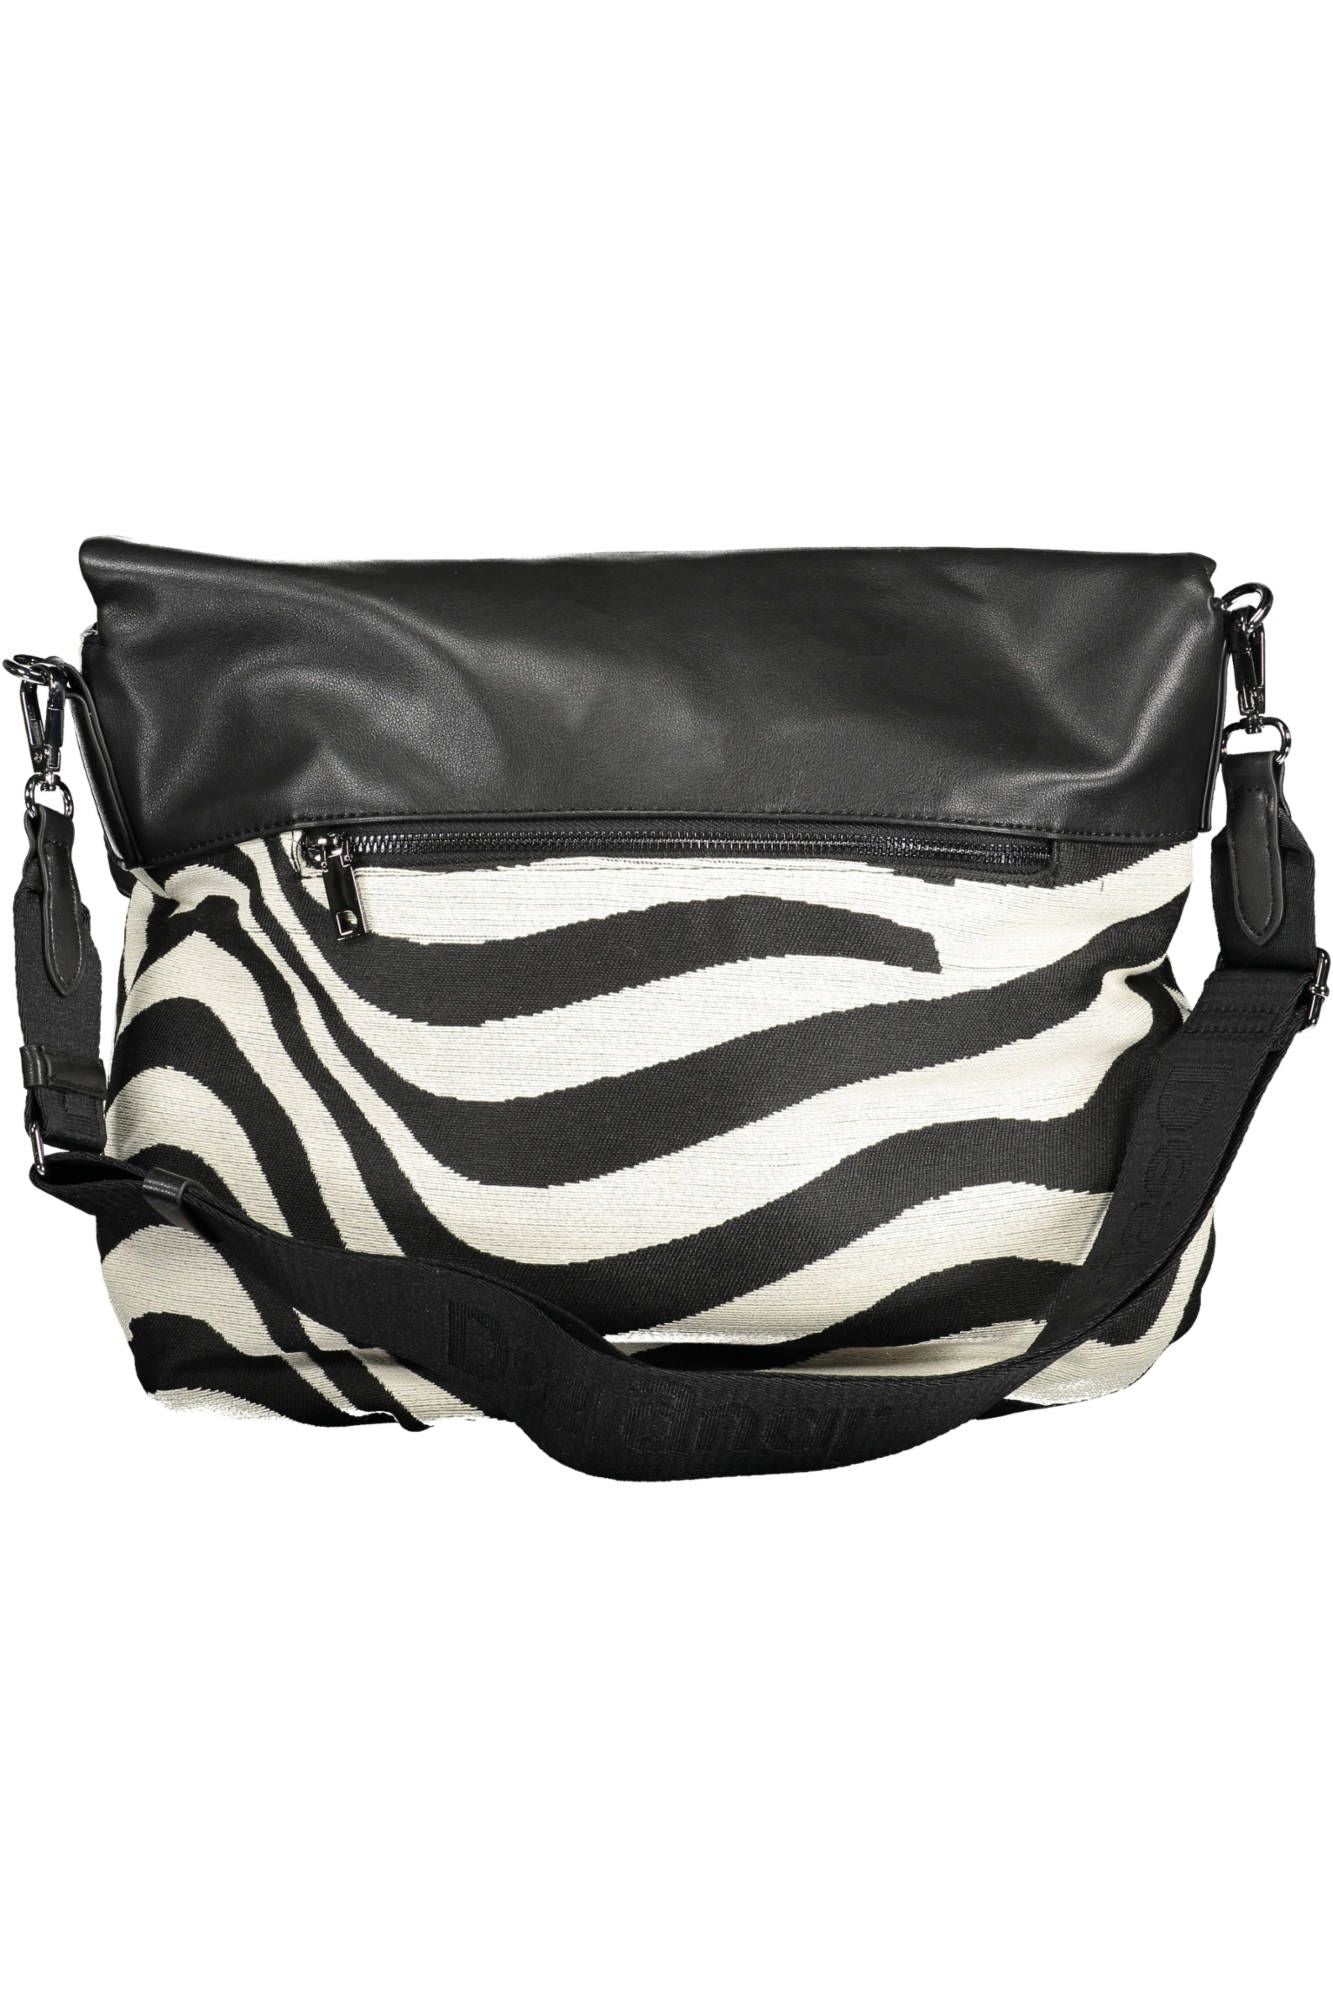 Desigual Black Cotton Handbag - Walbiz.com